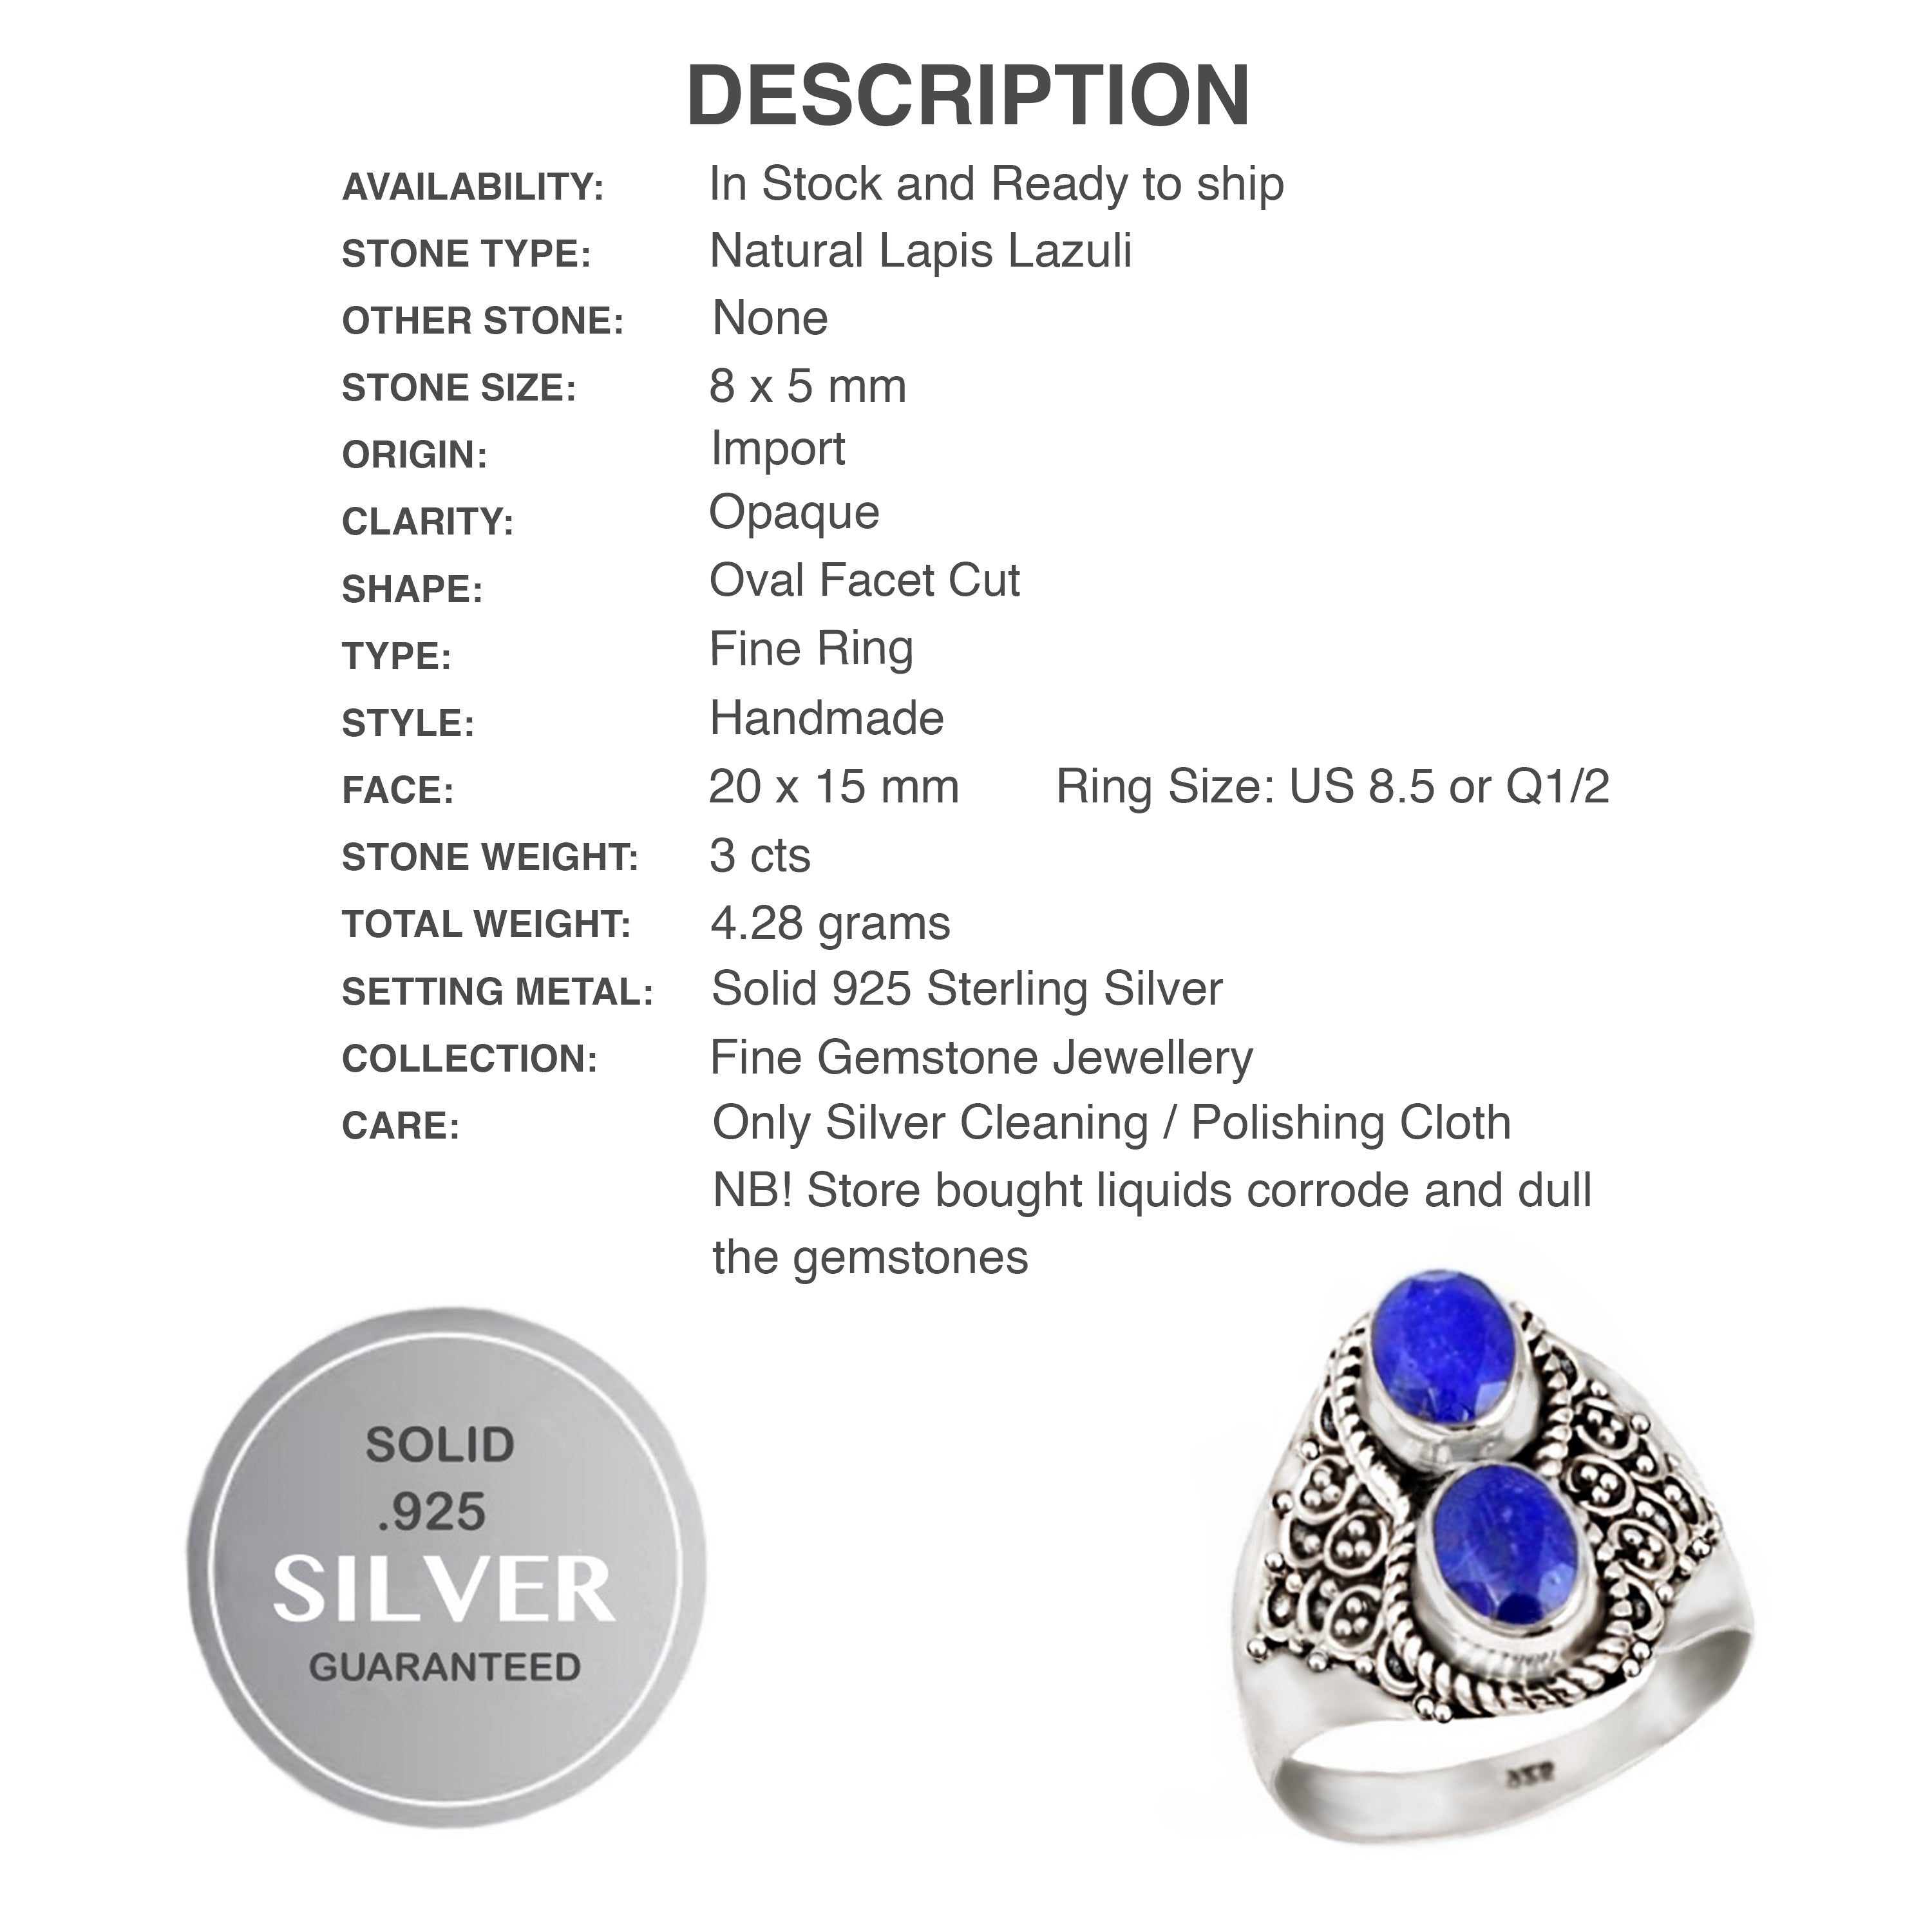 3 ct Natural Lapis Lazuli Gemstone Solid .925 Silver Ring Size US 8.5